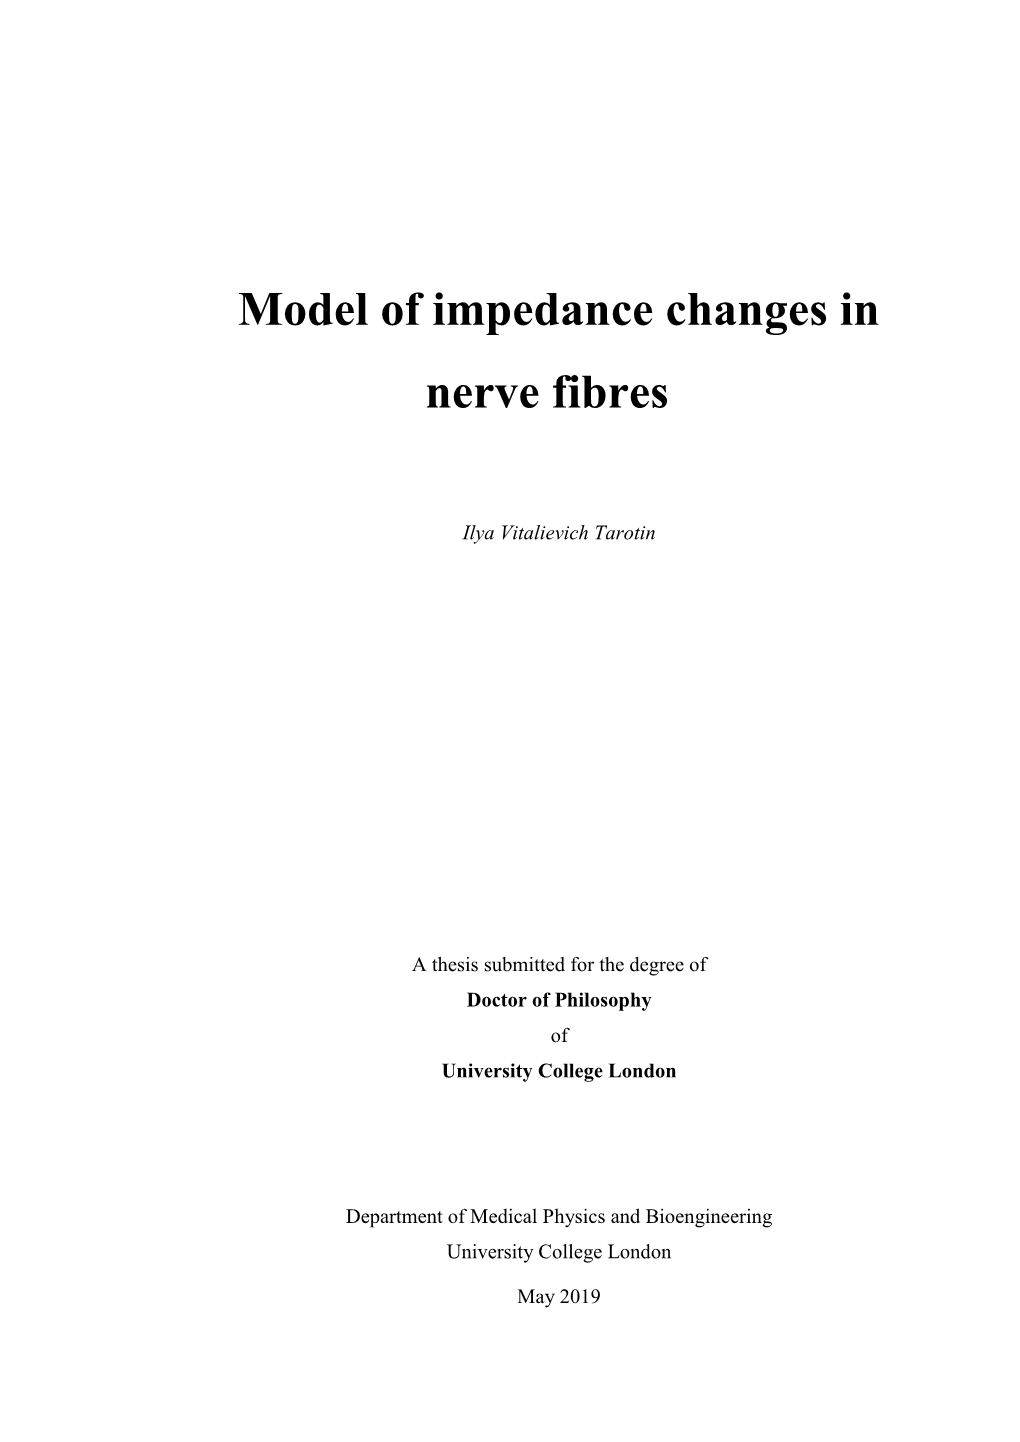 Model of Impedance Changes in Nerve Fibres